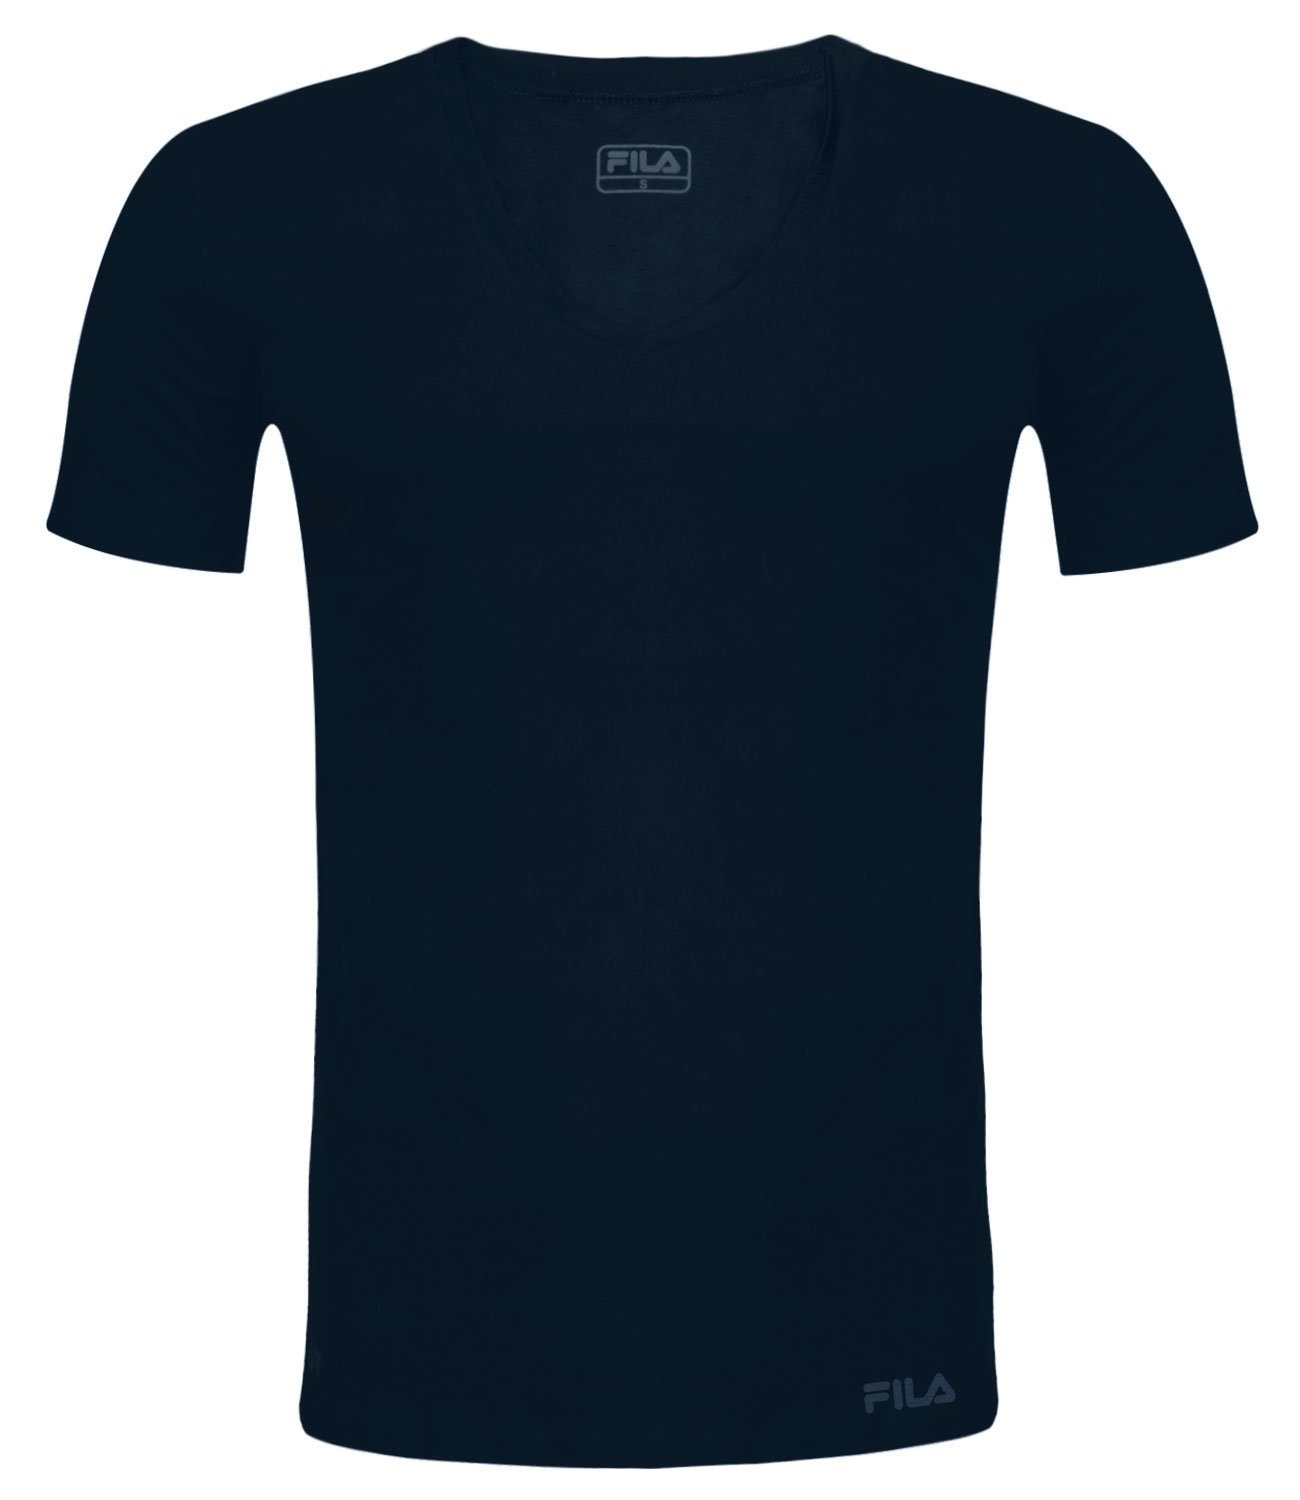 Fila Baumwolljersey weichem navy T-Shirt 321 V-Neck aus